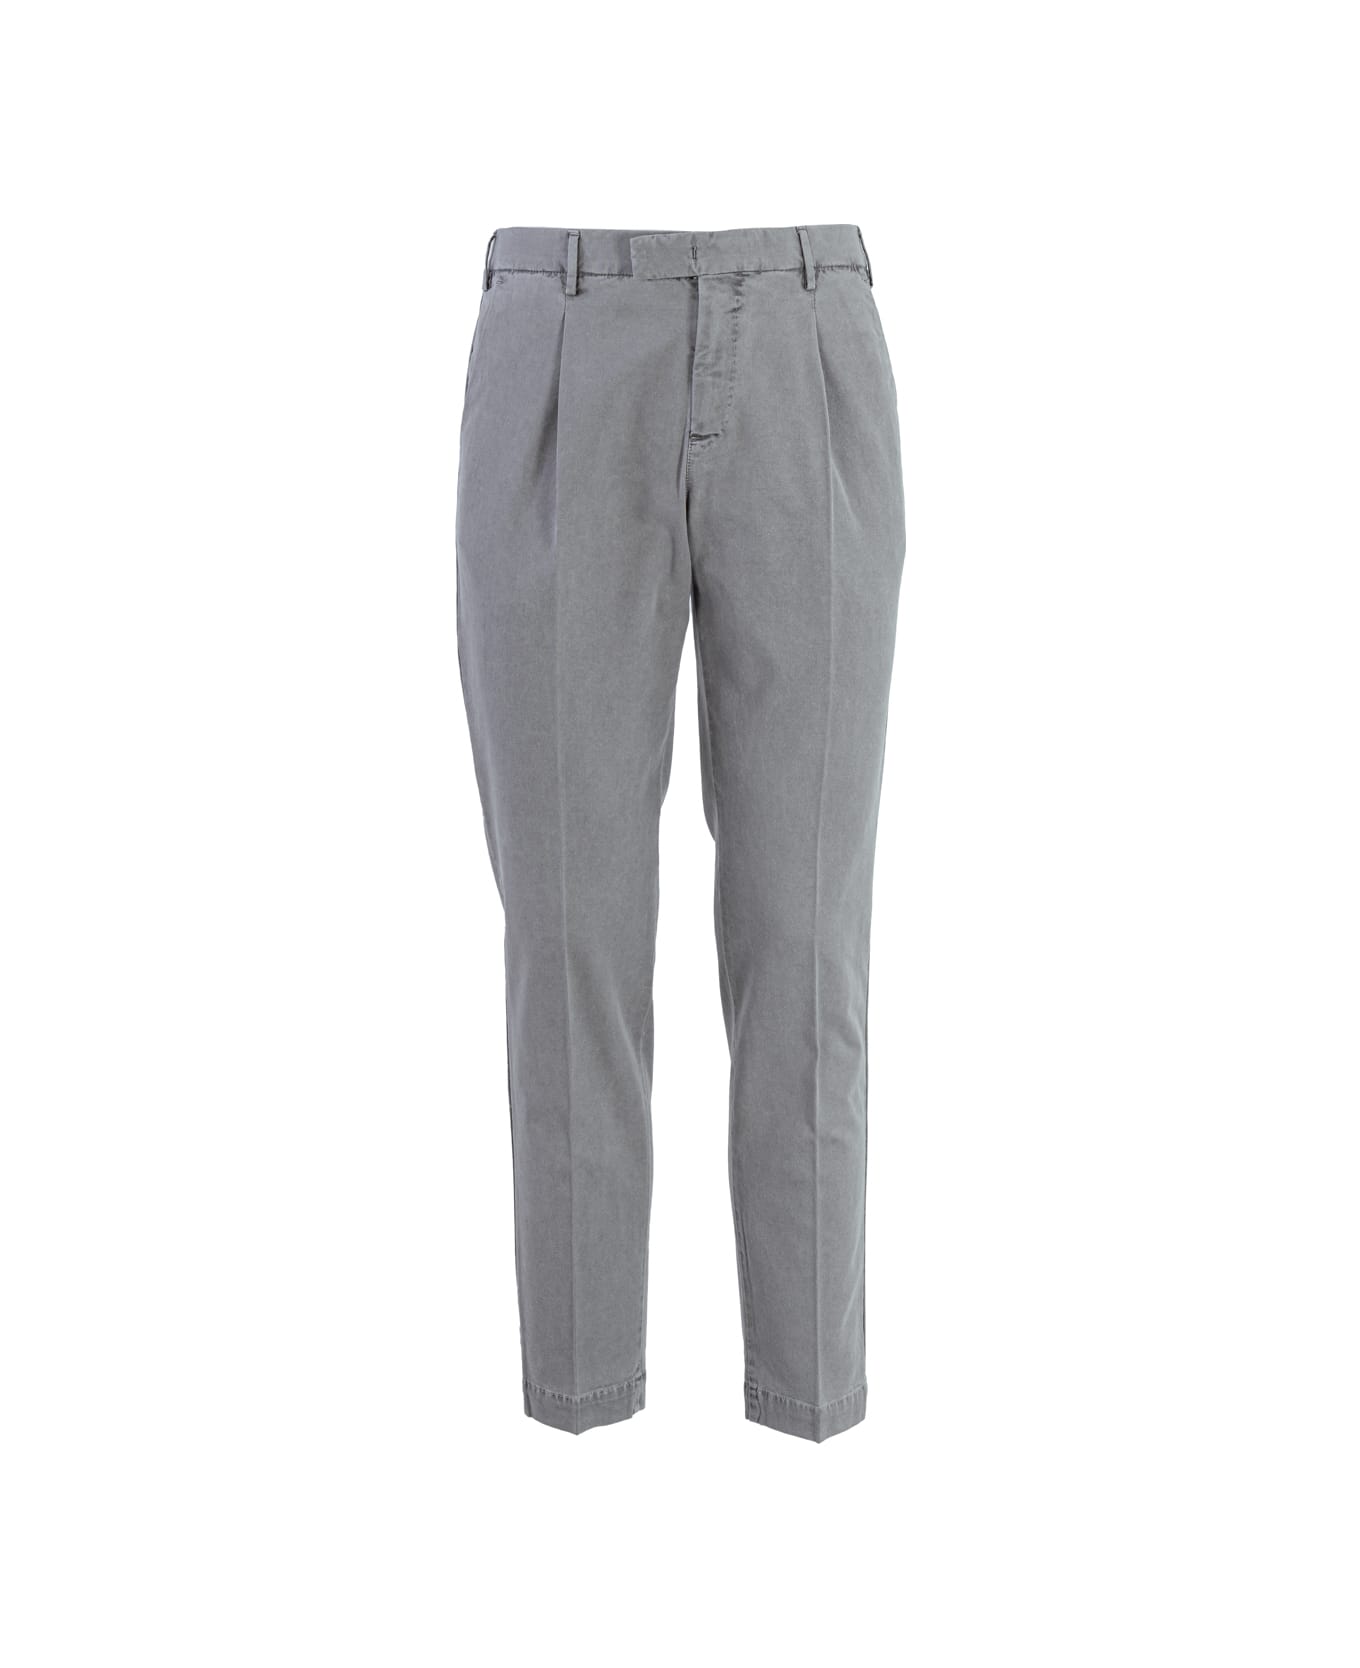 PT Torino Pt01 Trousers Grey - Grey ボトムス